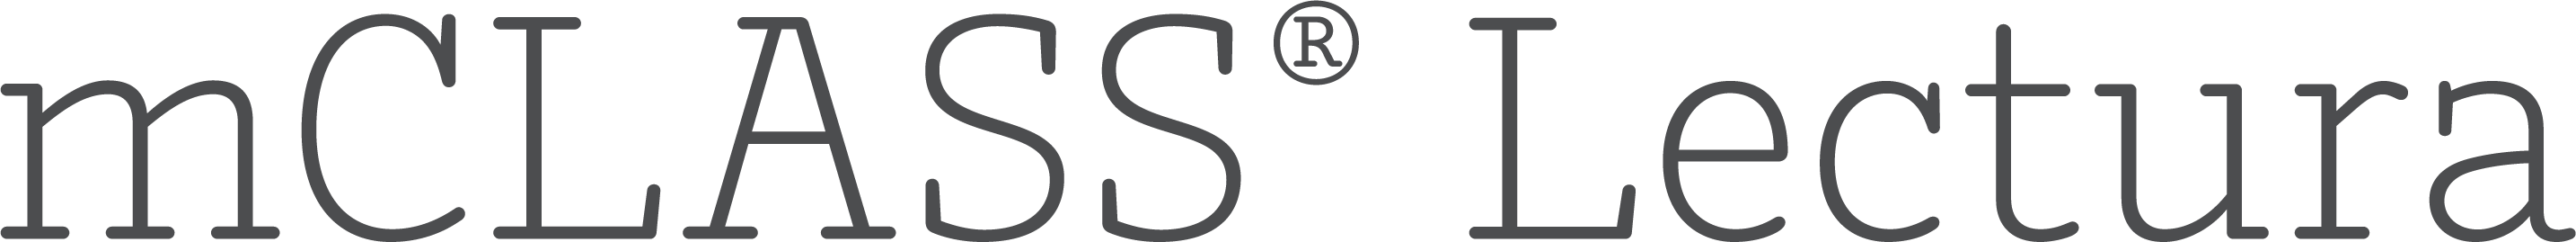 Black and white logo reading 